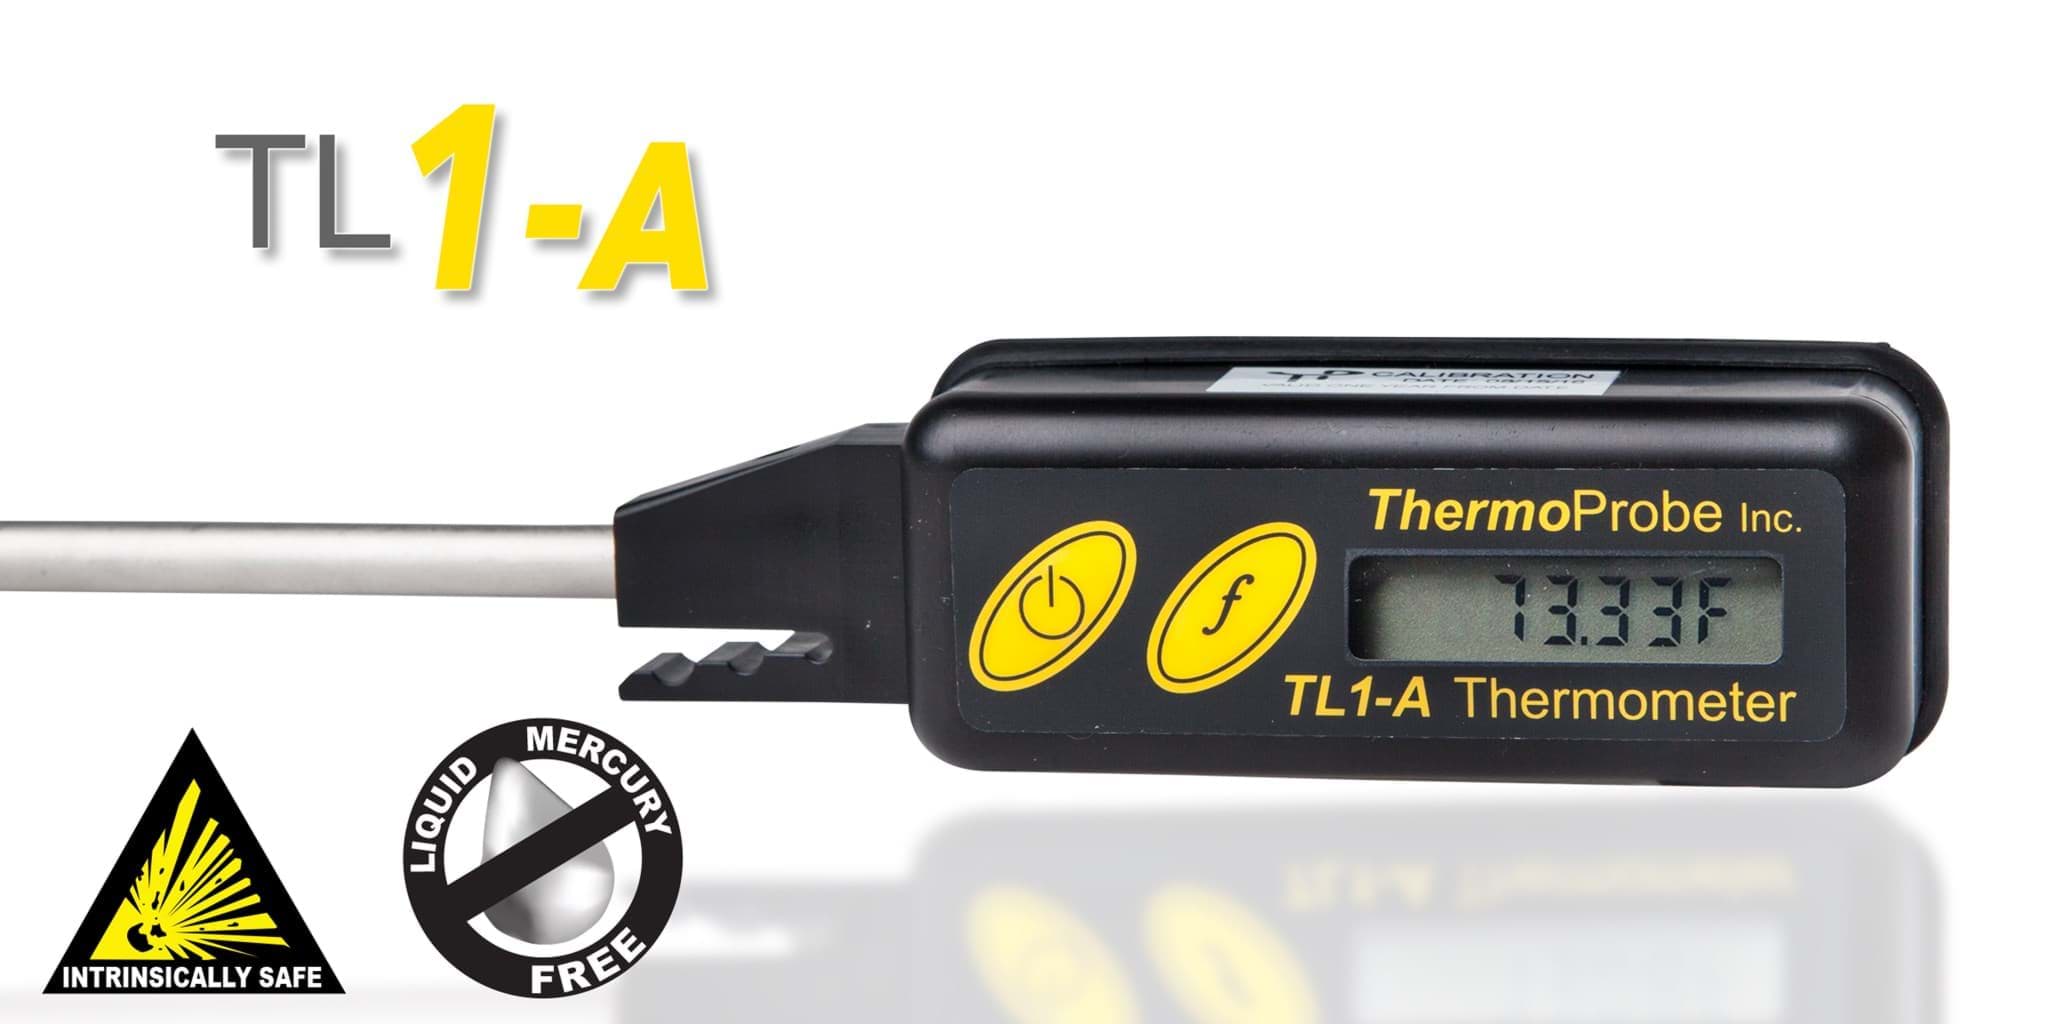 https://parkesscientific.com/media/image/487/thermoprobe-tl1a-digital-stem-thermometer-487.jpg?size=250